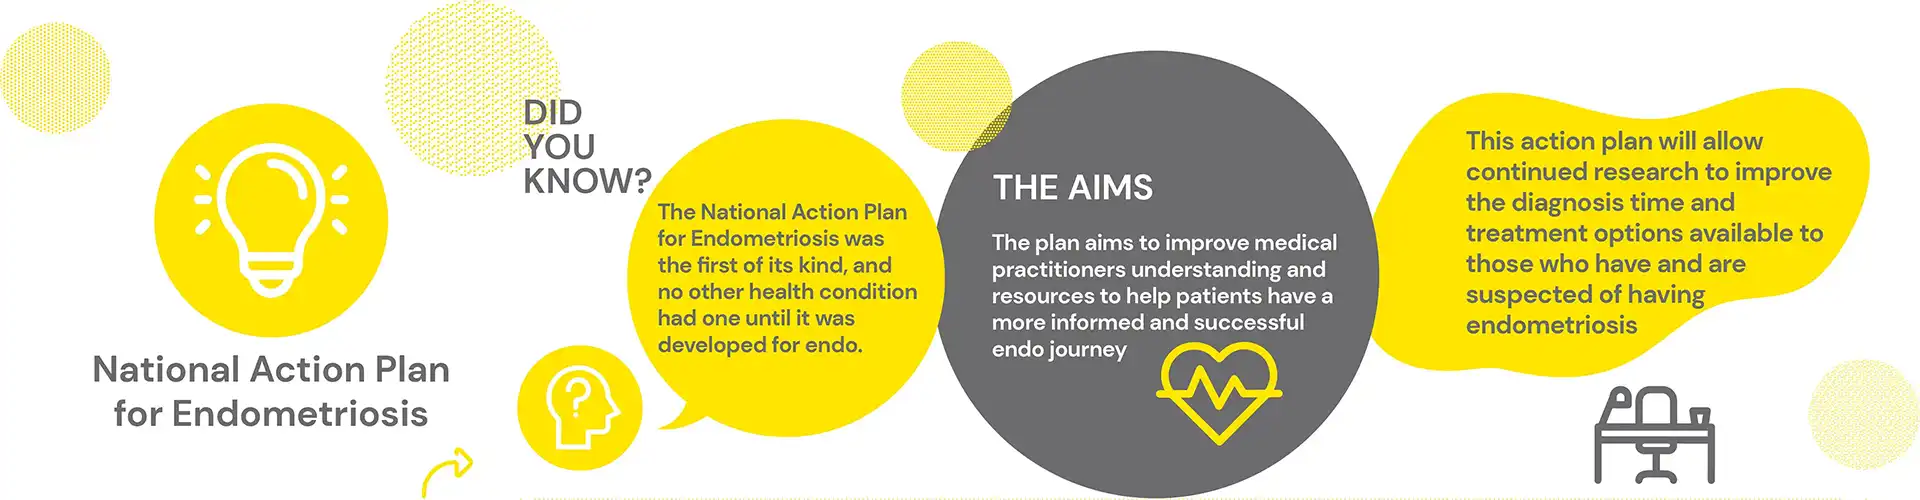 Snack Drawer - National Action Plan for Endometriosis Image